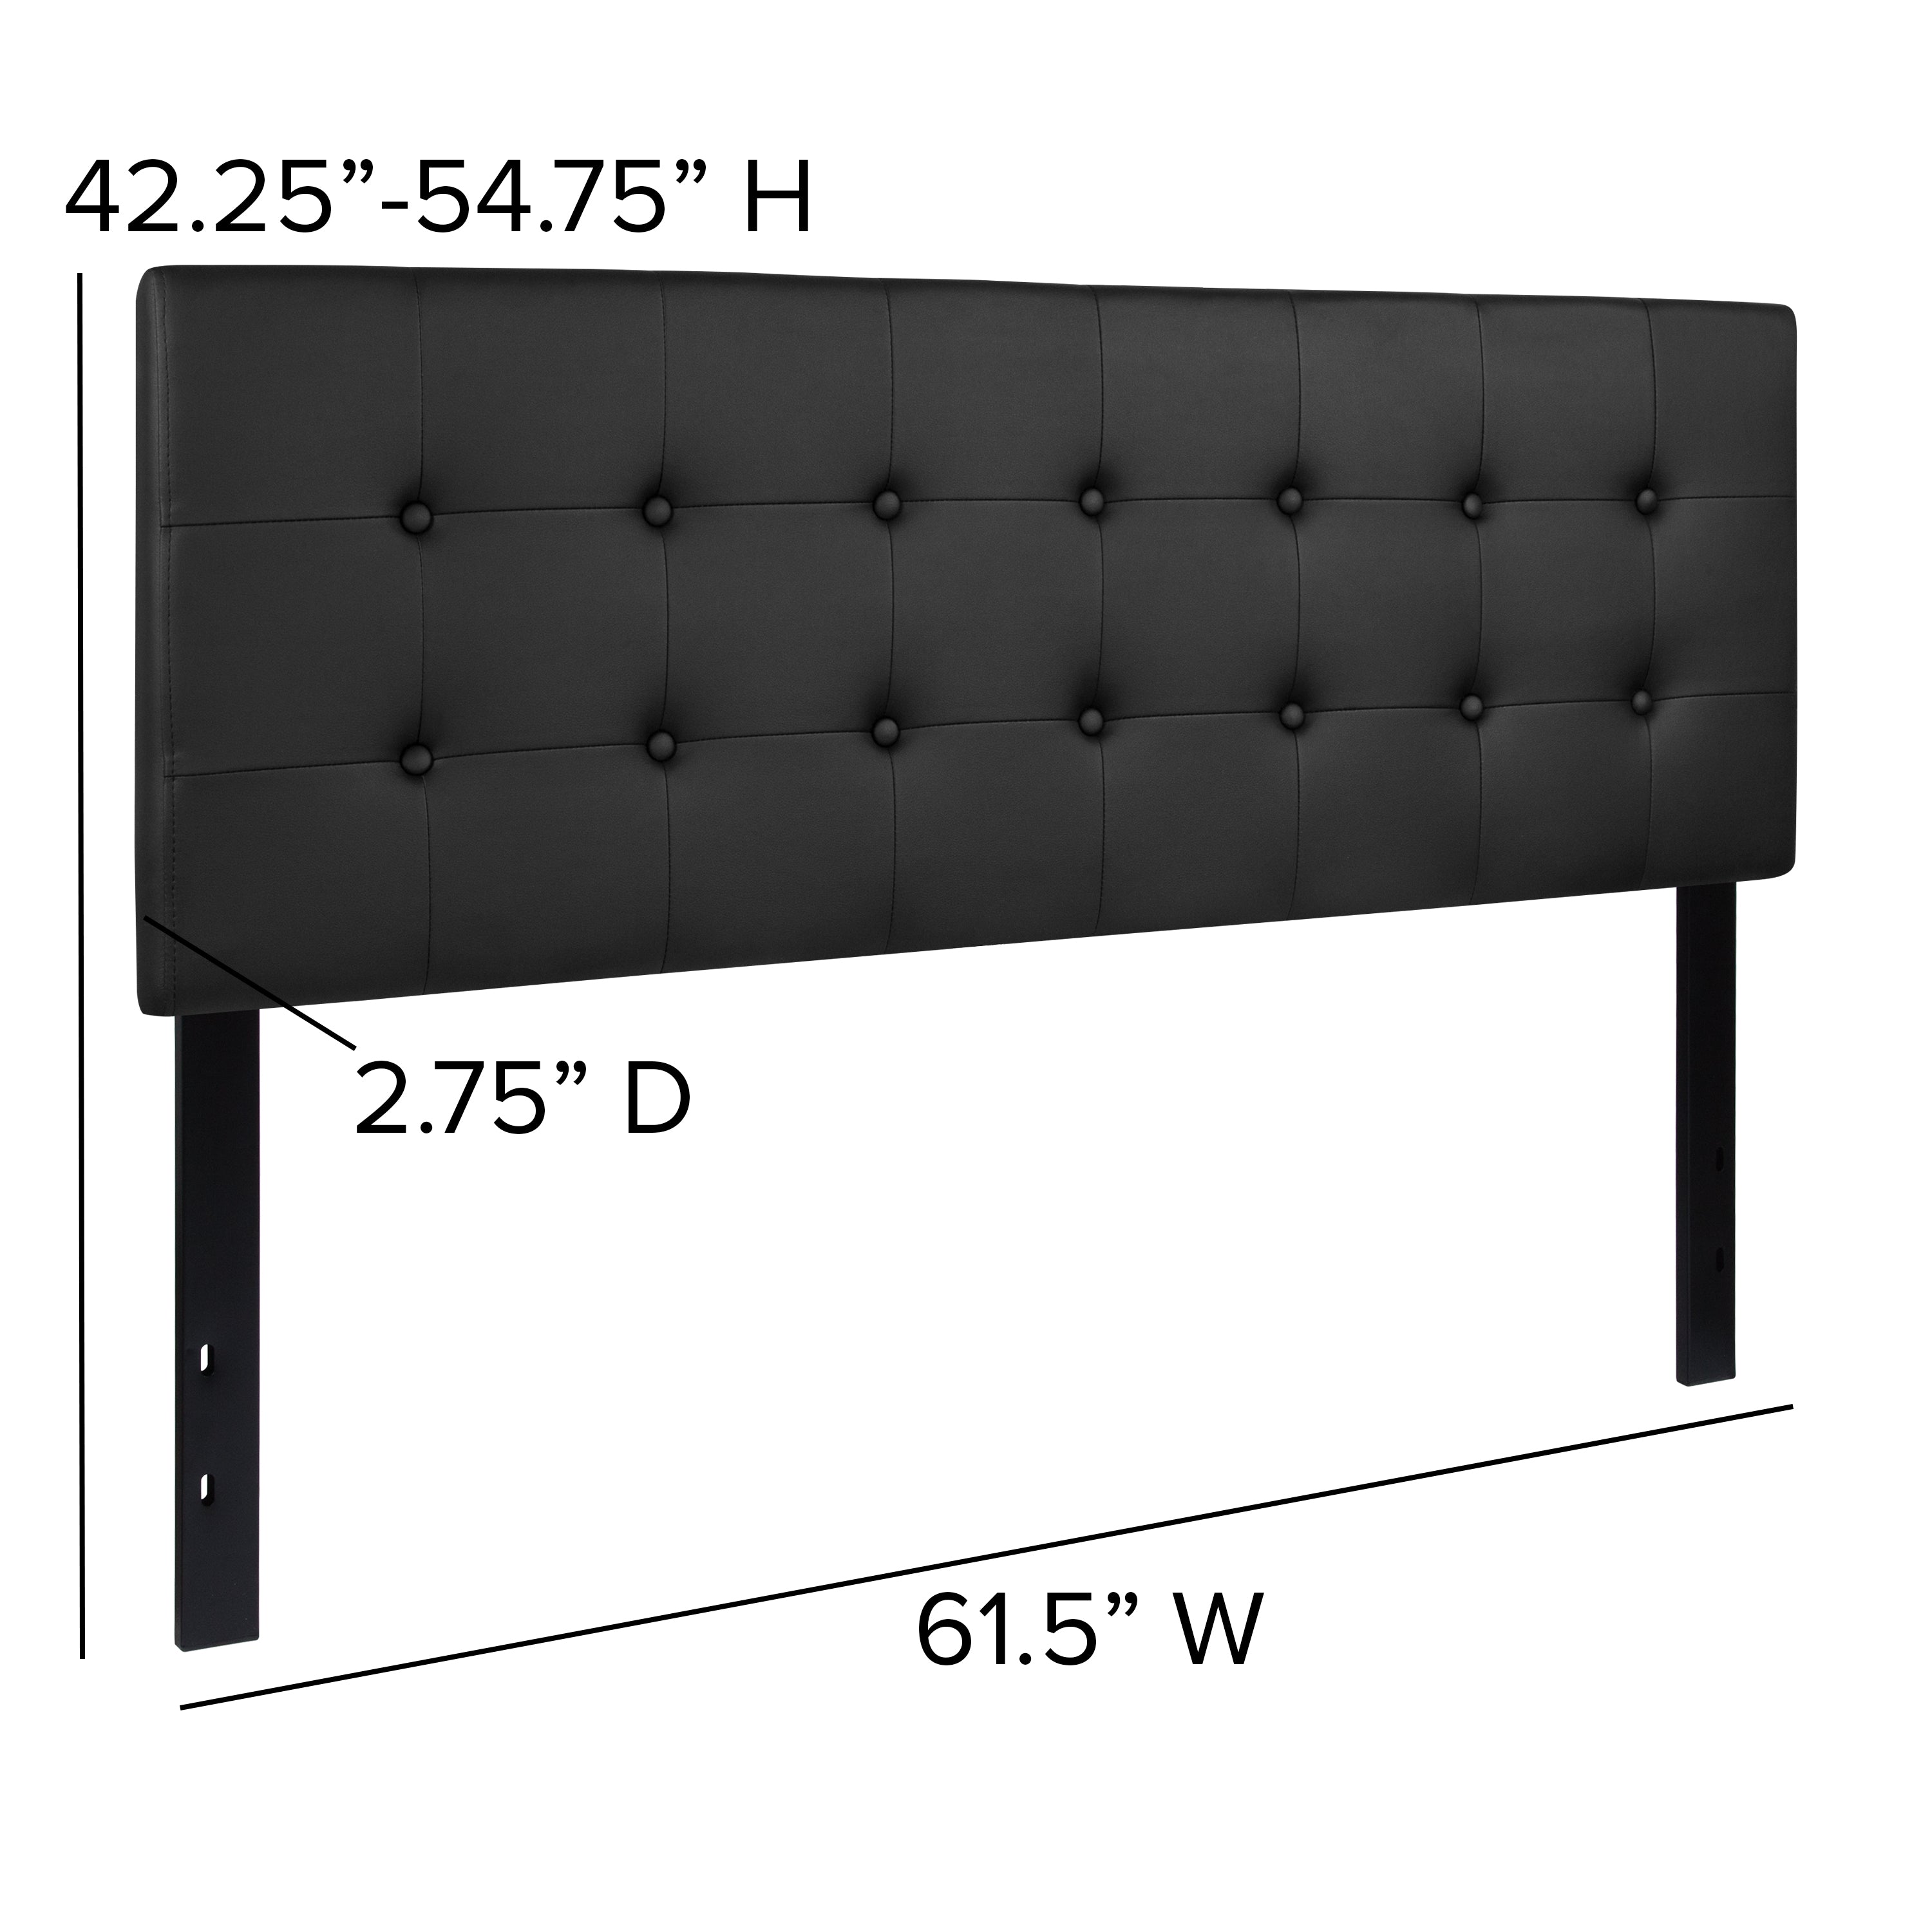 Lennox Button Tufted Upholstered Headboard-Headboard-Flash Furniture-Wall2Wall Furnishings